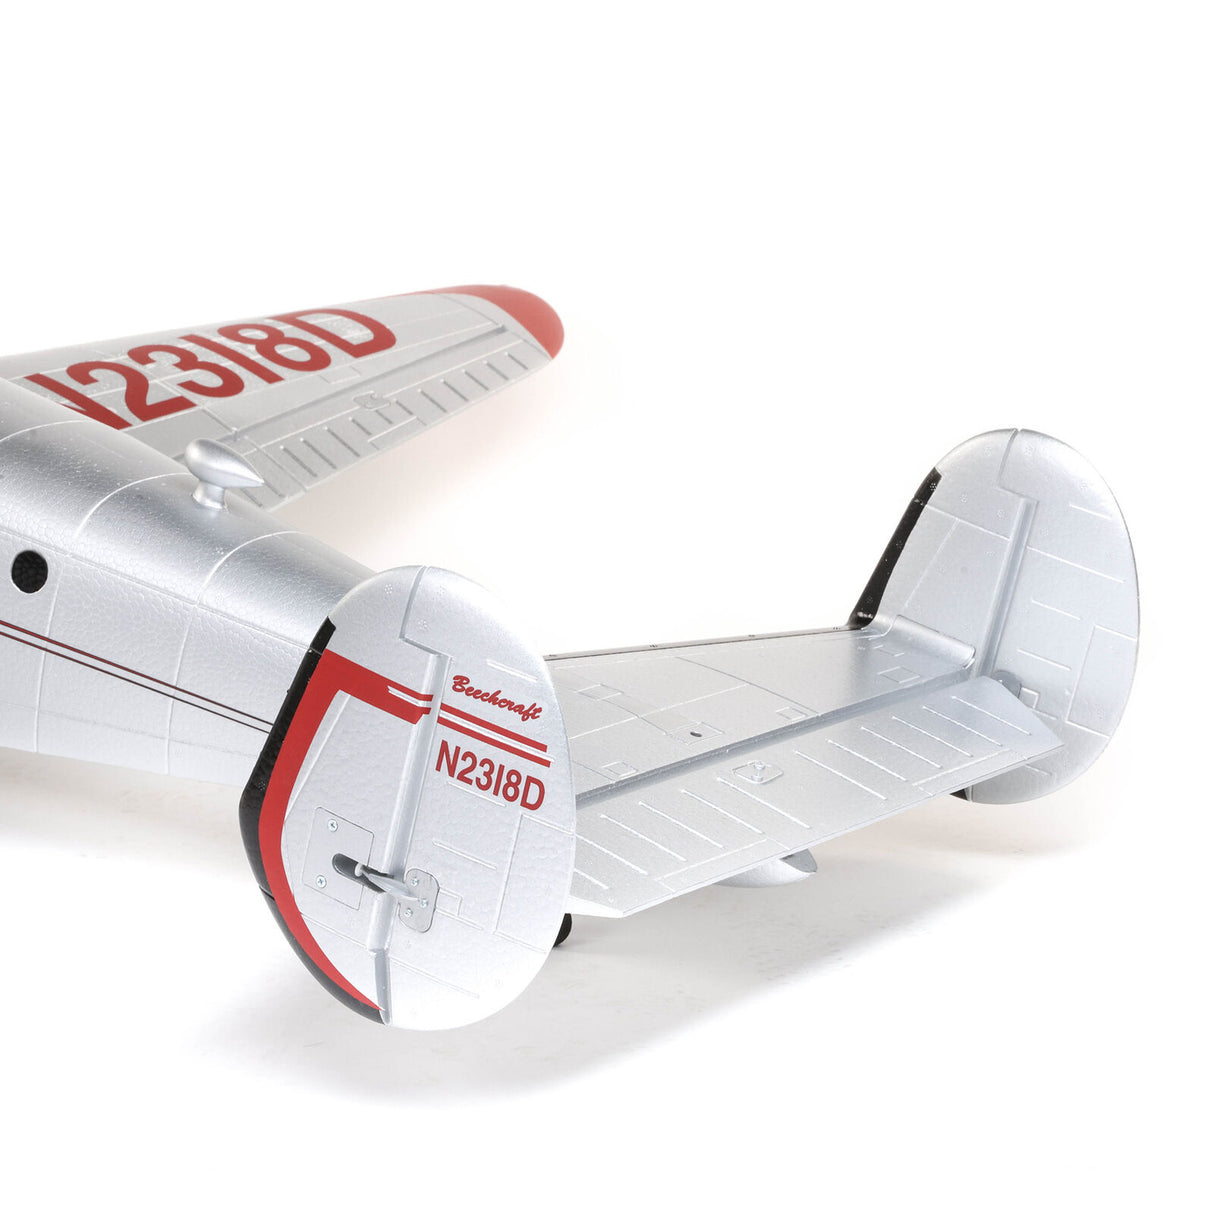 E-Flite Twin Beech D18 1.5m RC Plane, BNF Basic - Hobbytech Toys